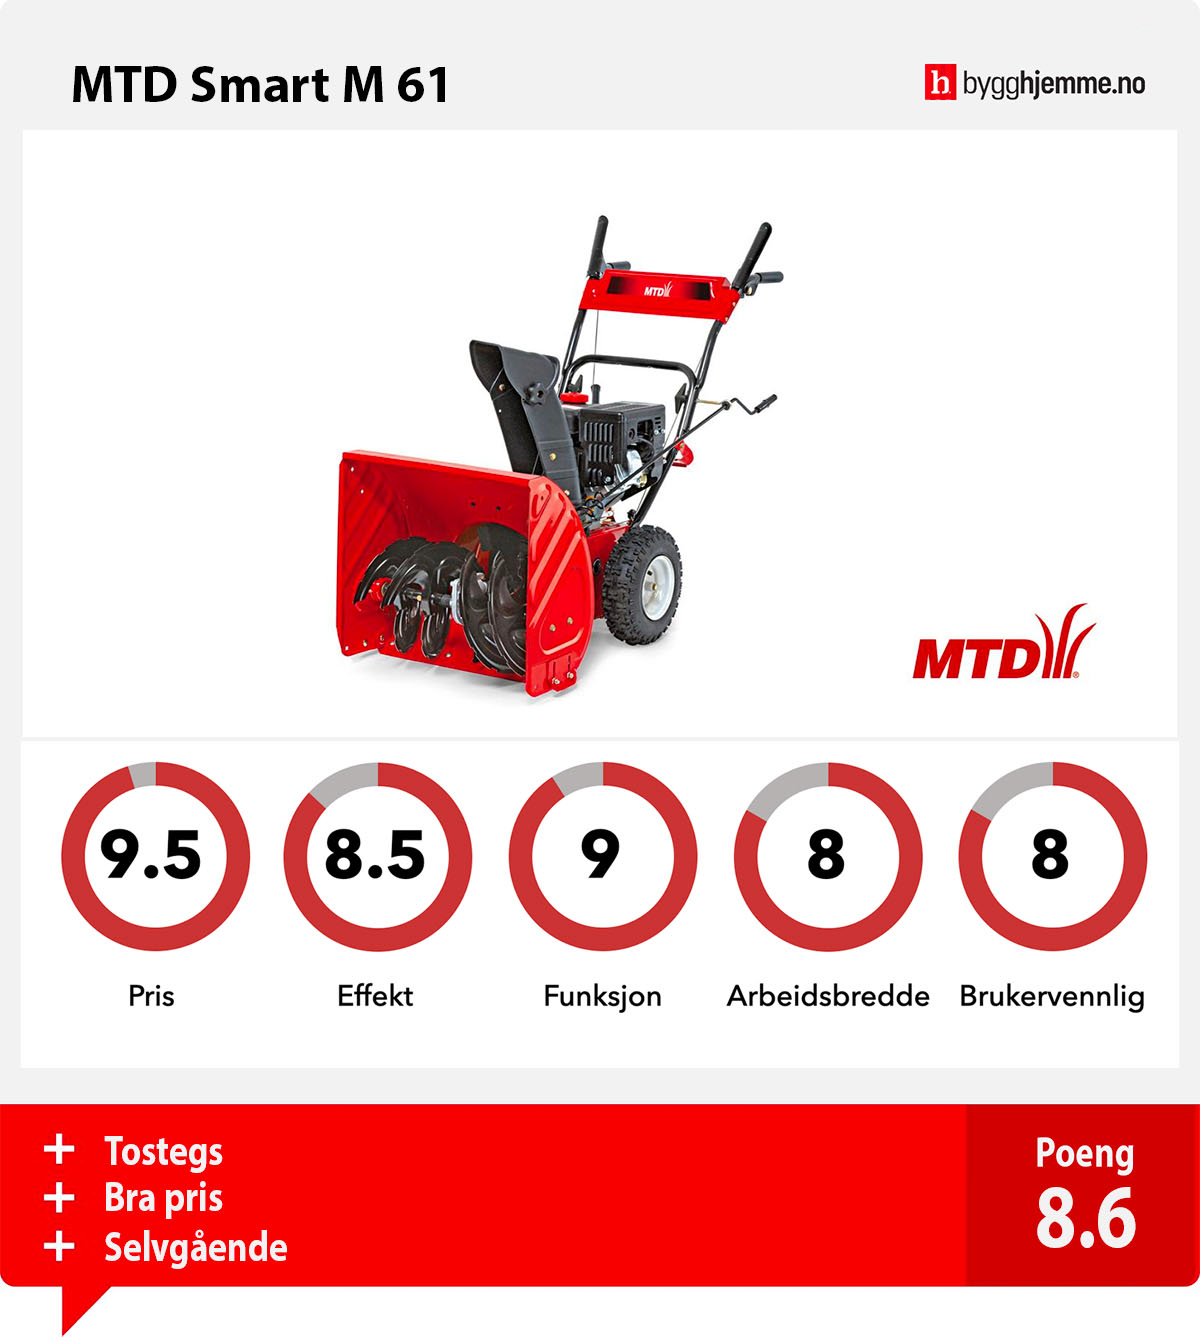 Snøfreser MTD Smart M 61  | Bygghjemme.no